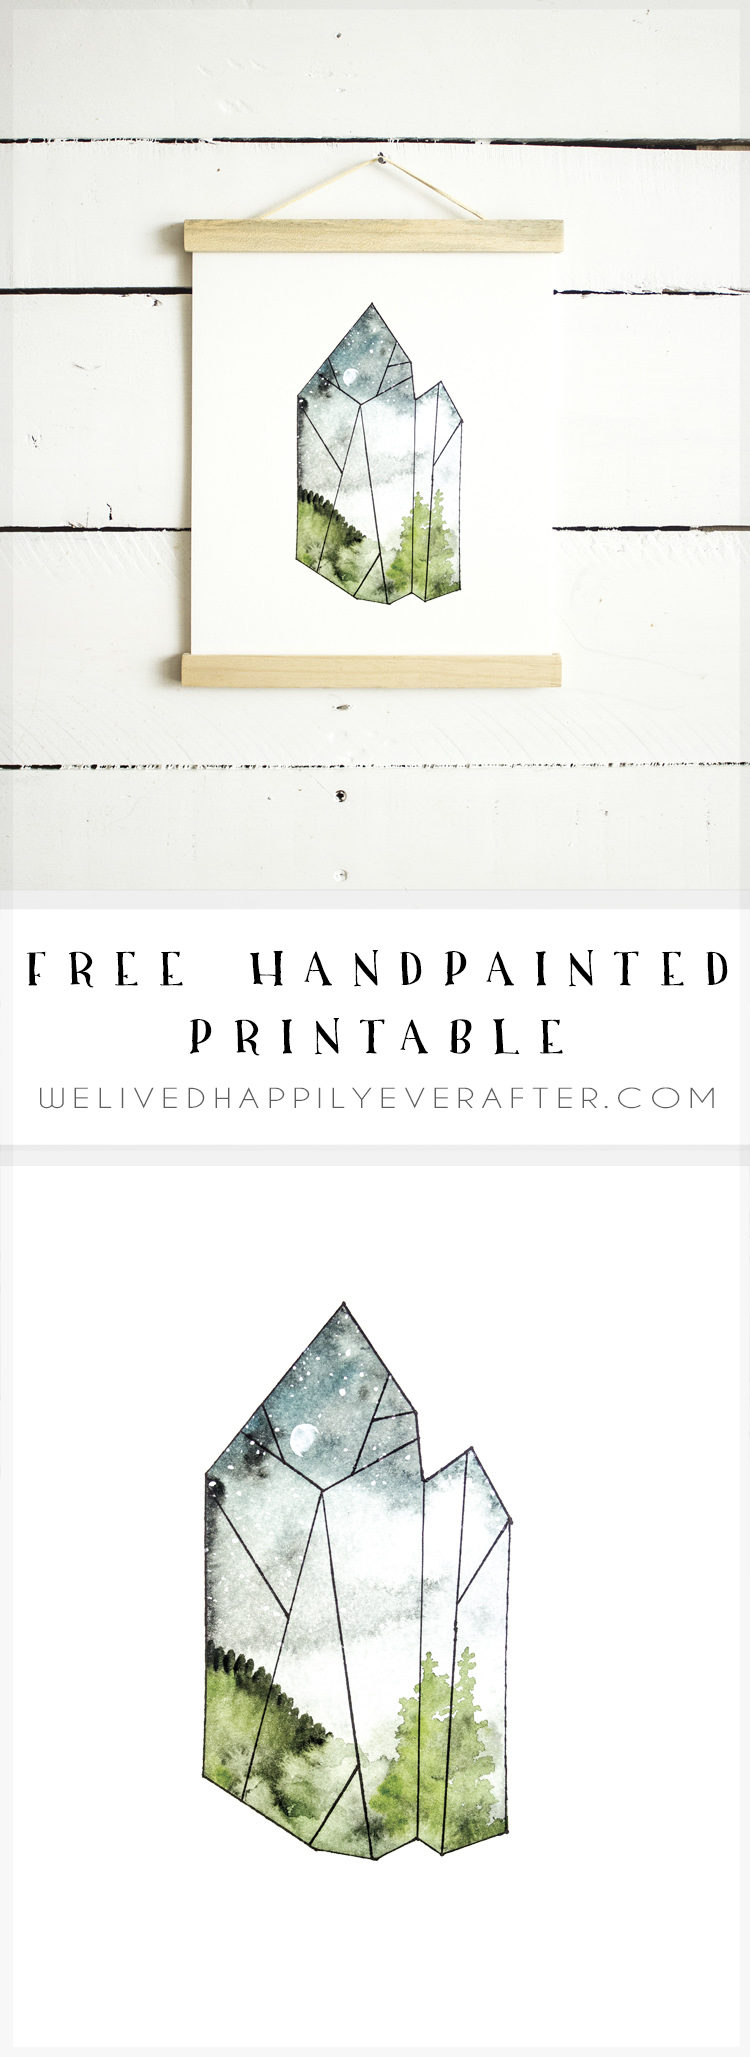 Free Moody Geometric Wall Art Printable Minimalist Nursery Print Poster For Your Home Decor